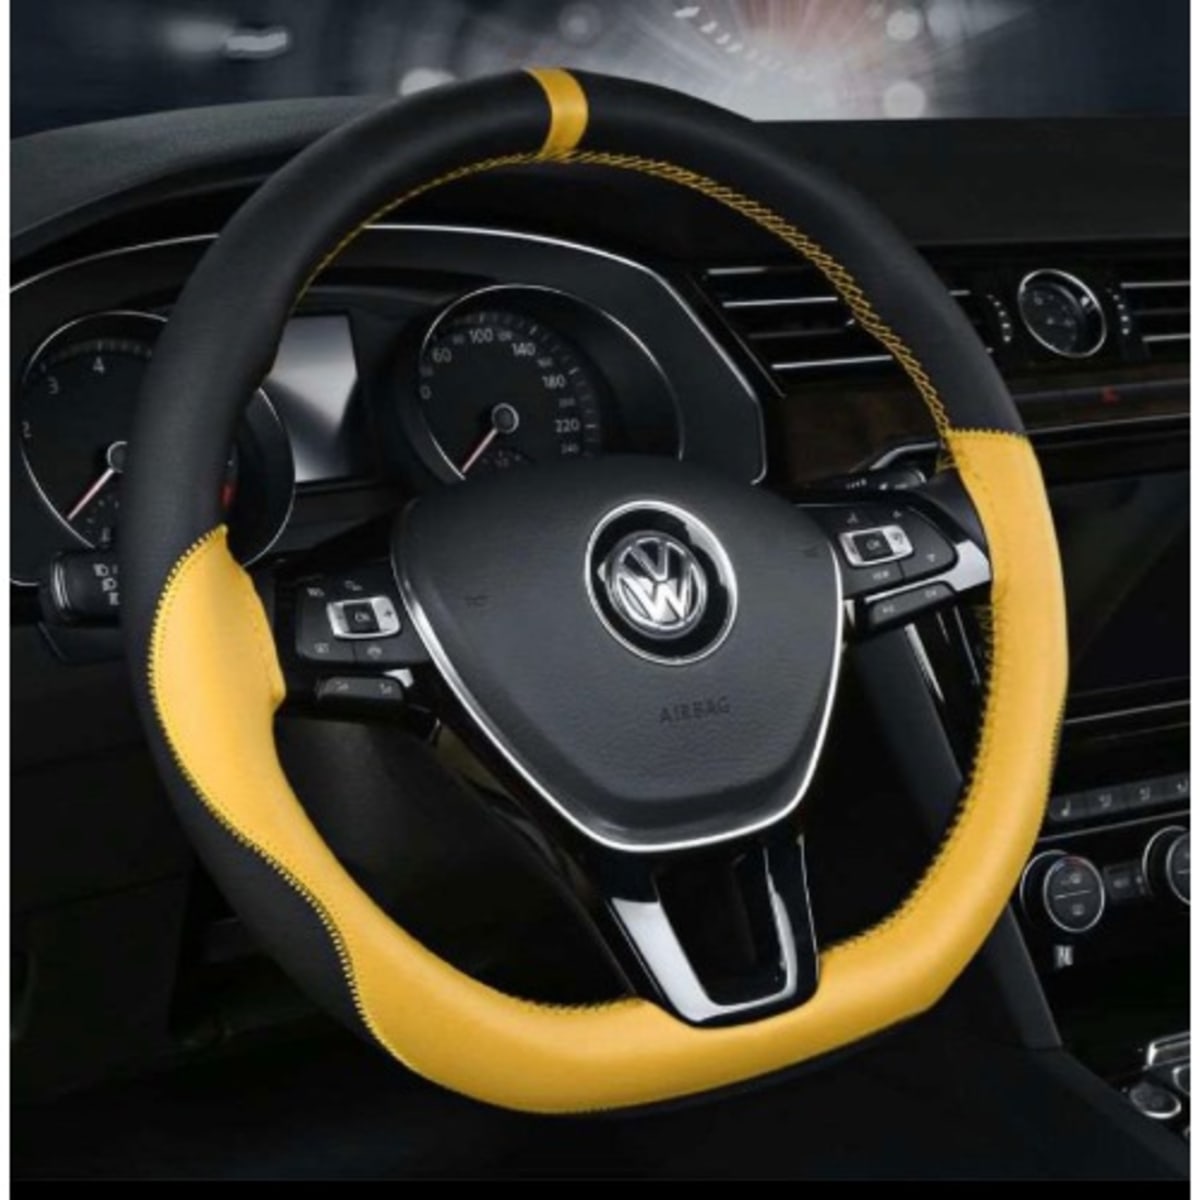 LV Car Steering Wheel Cover price from konga in Nigeria - Yaoota!